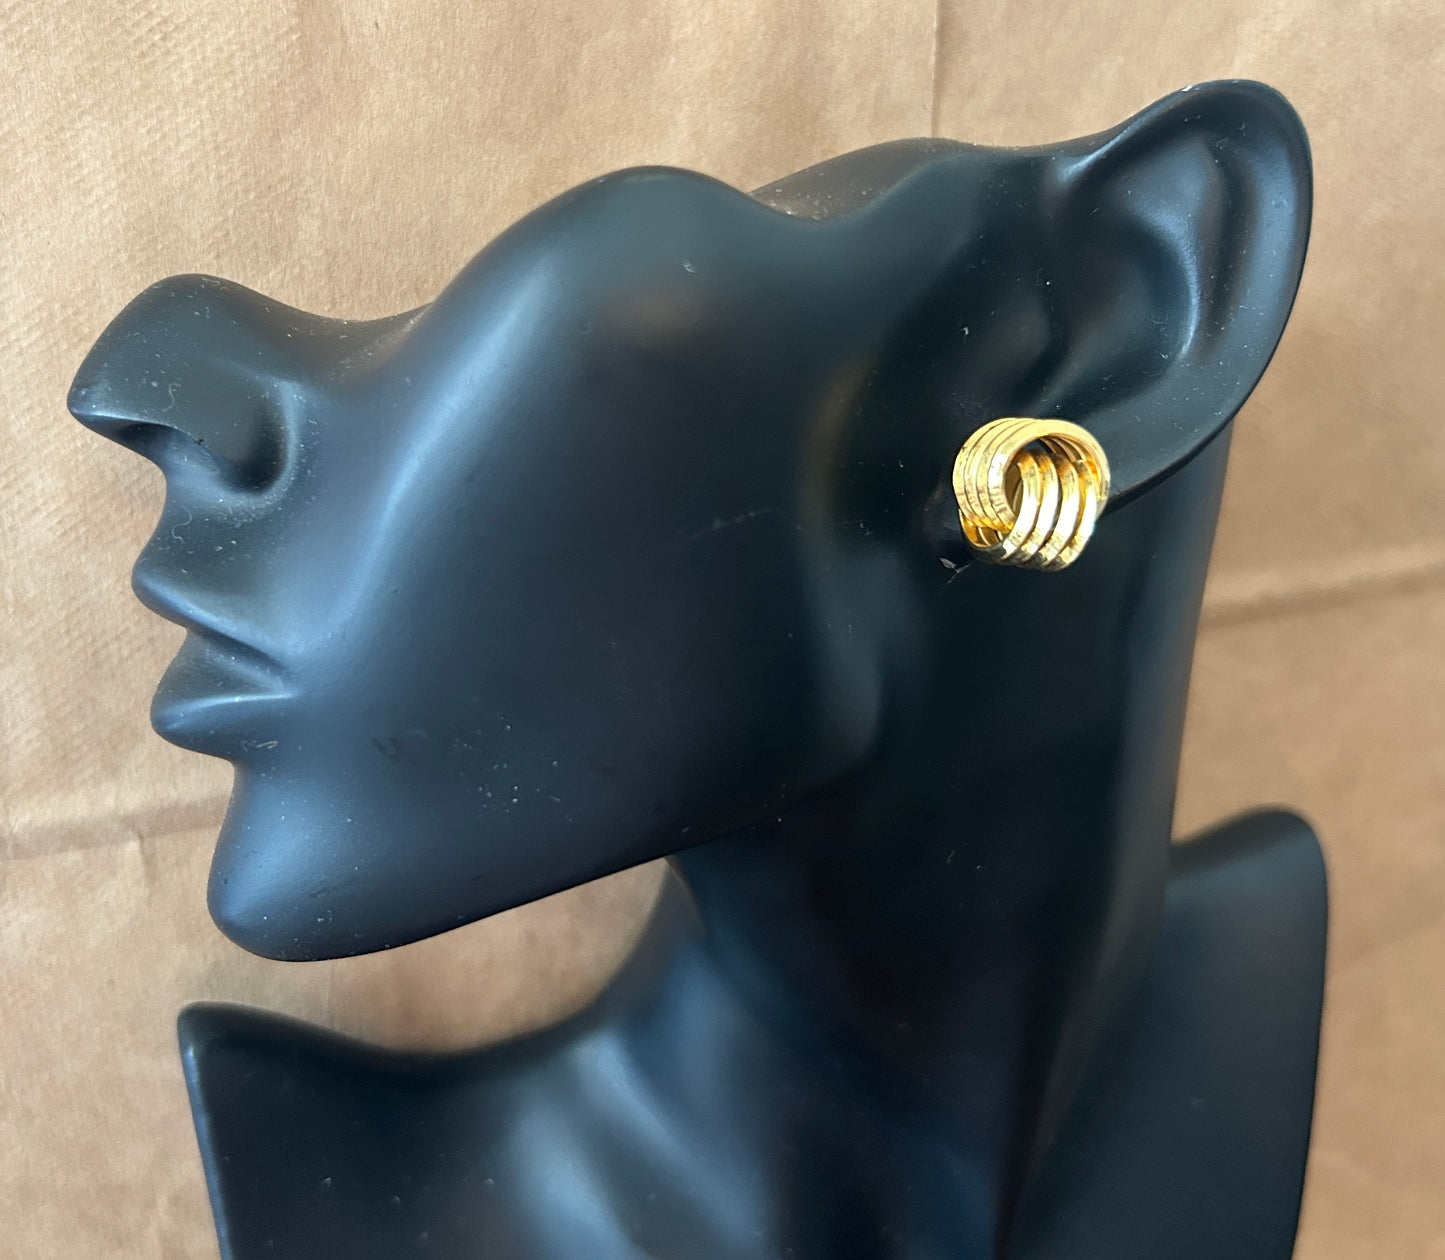 Vintage Gold Tone Large Knot Pierced Stud Earrings